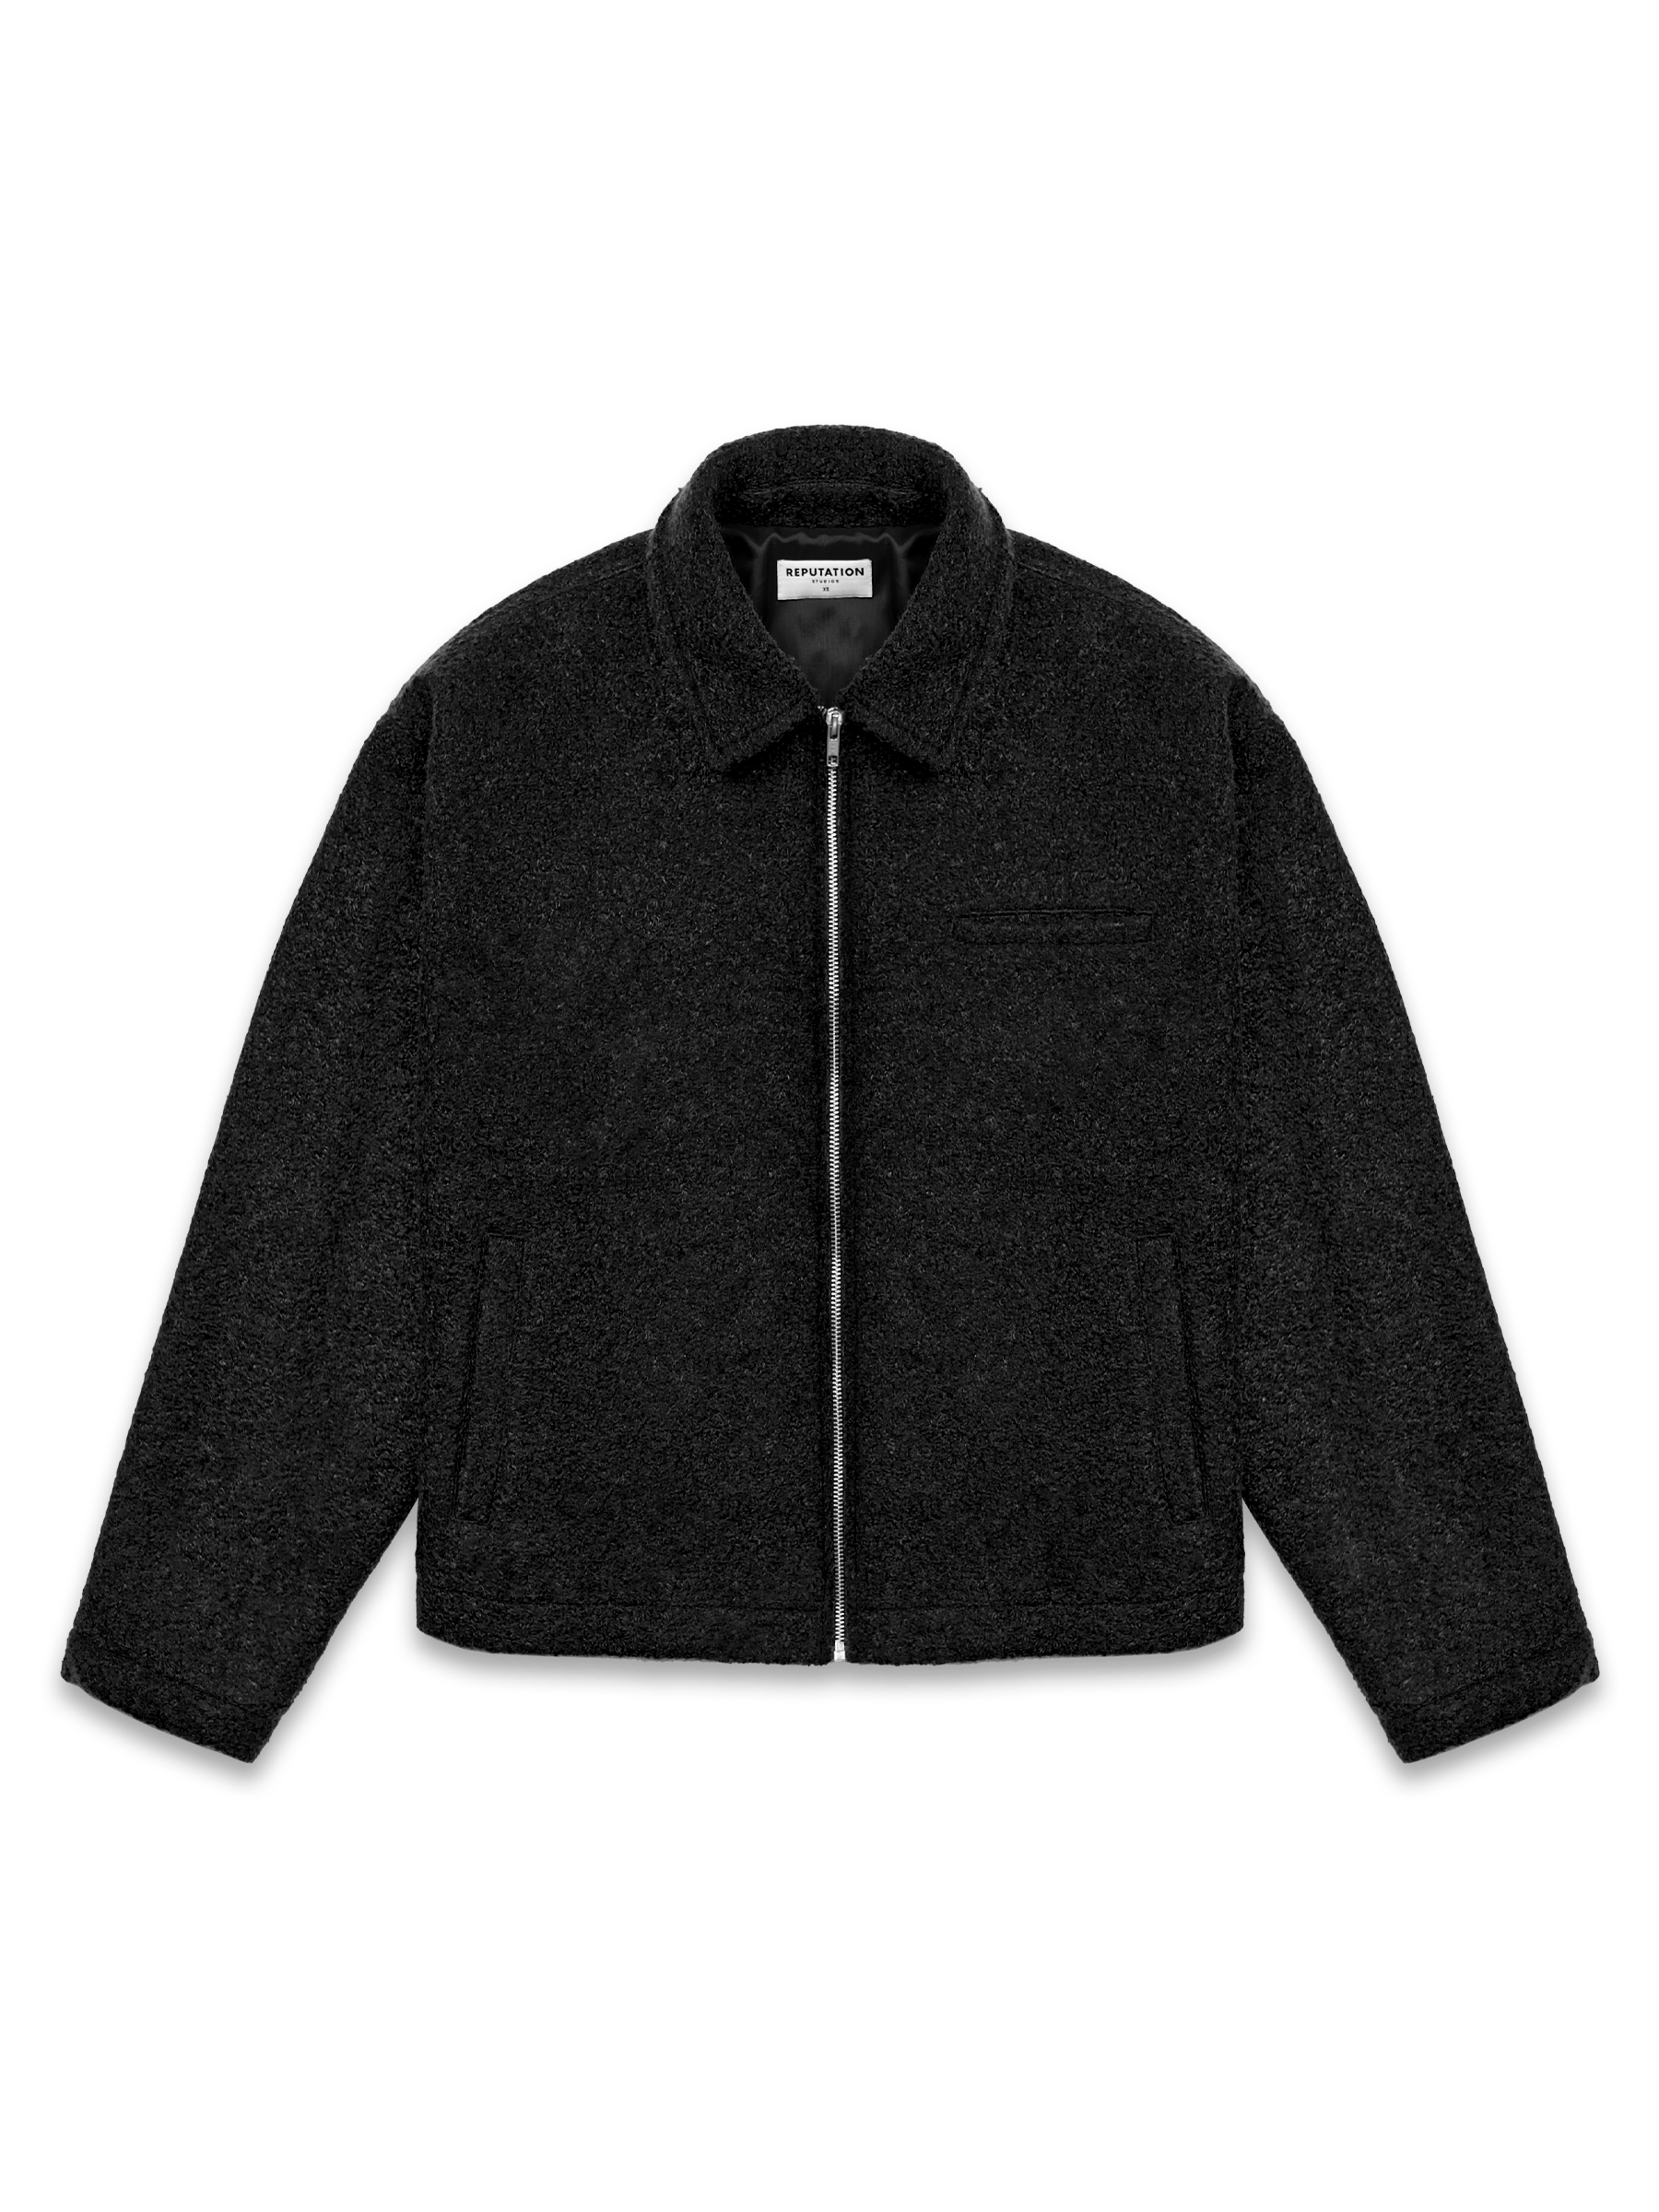 Shirt Jacket - Buy Shirt Jacket online - Reputation Studios ...